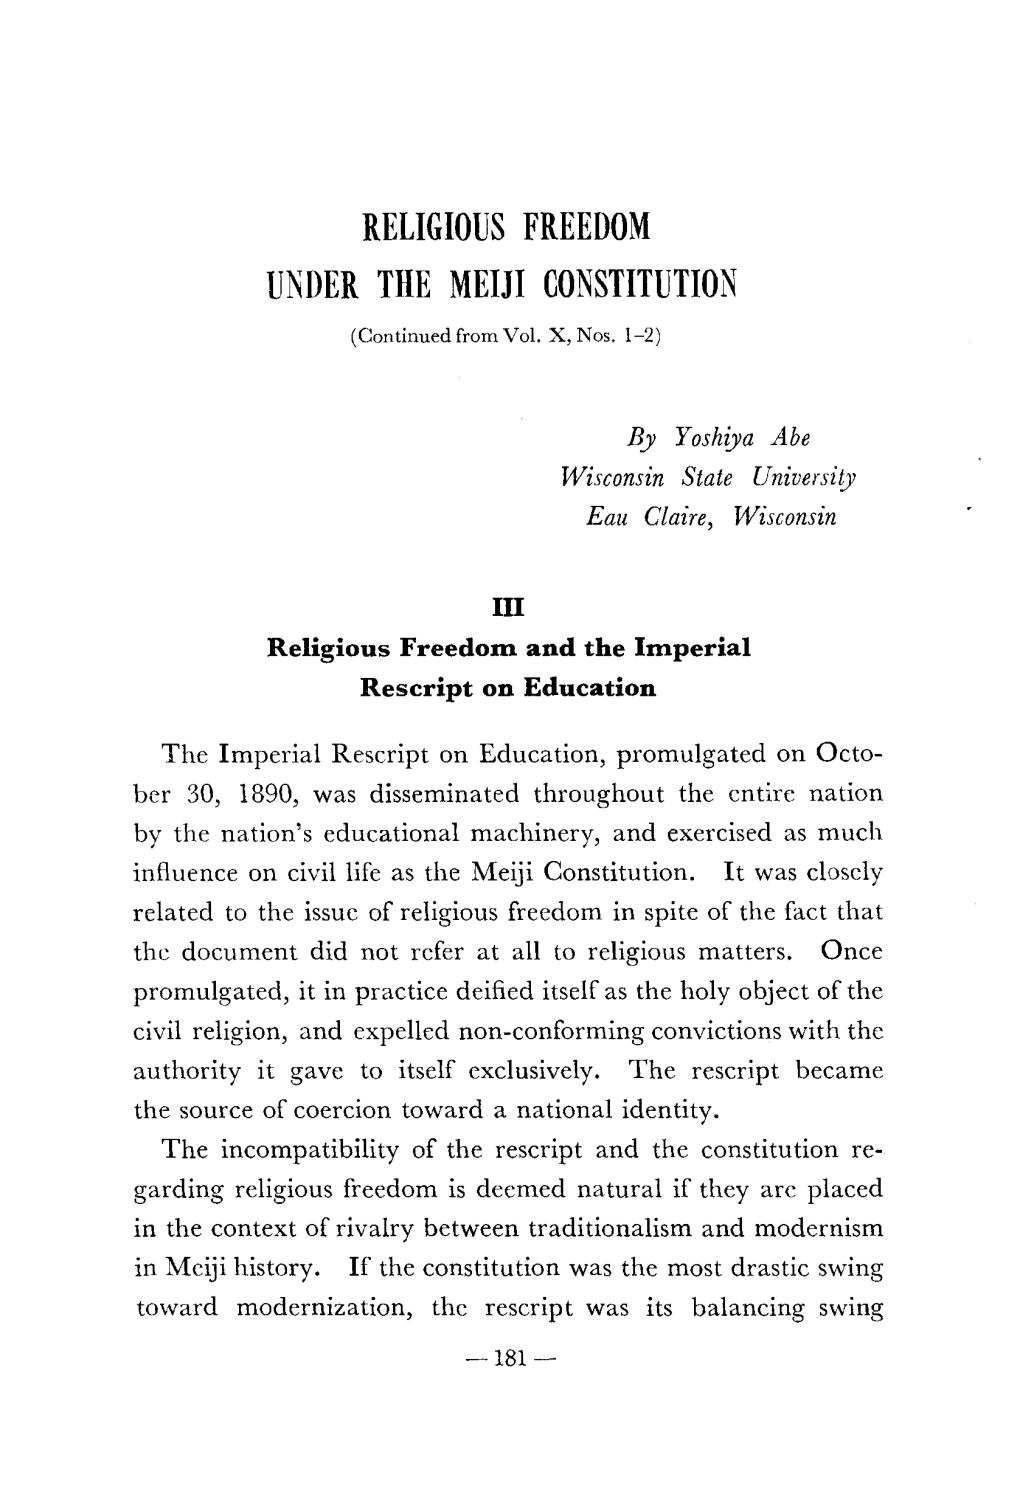 Religious Freedom Under the Meiji Constitution